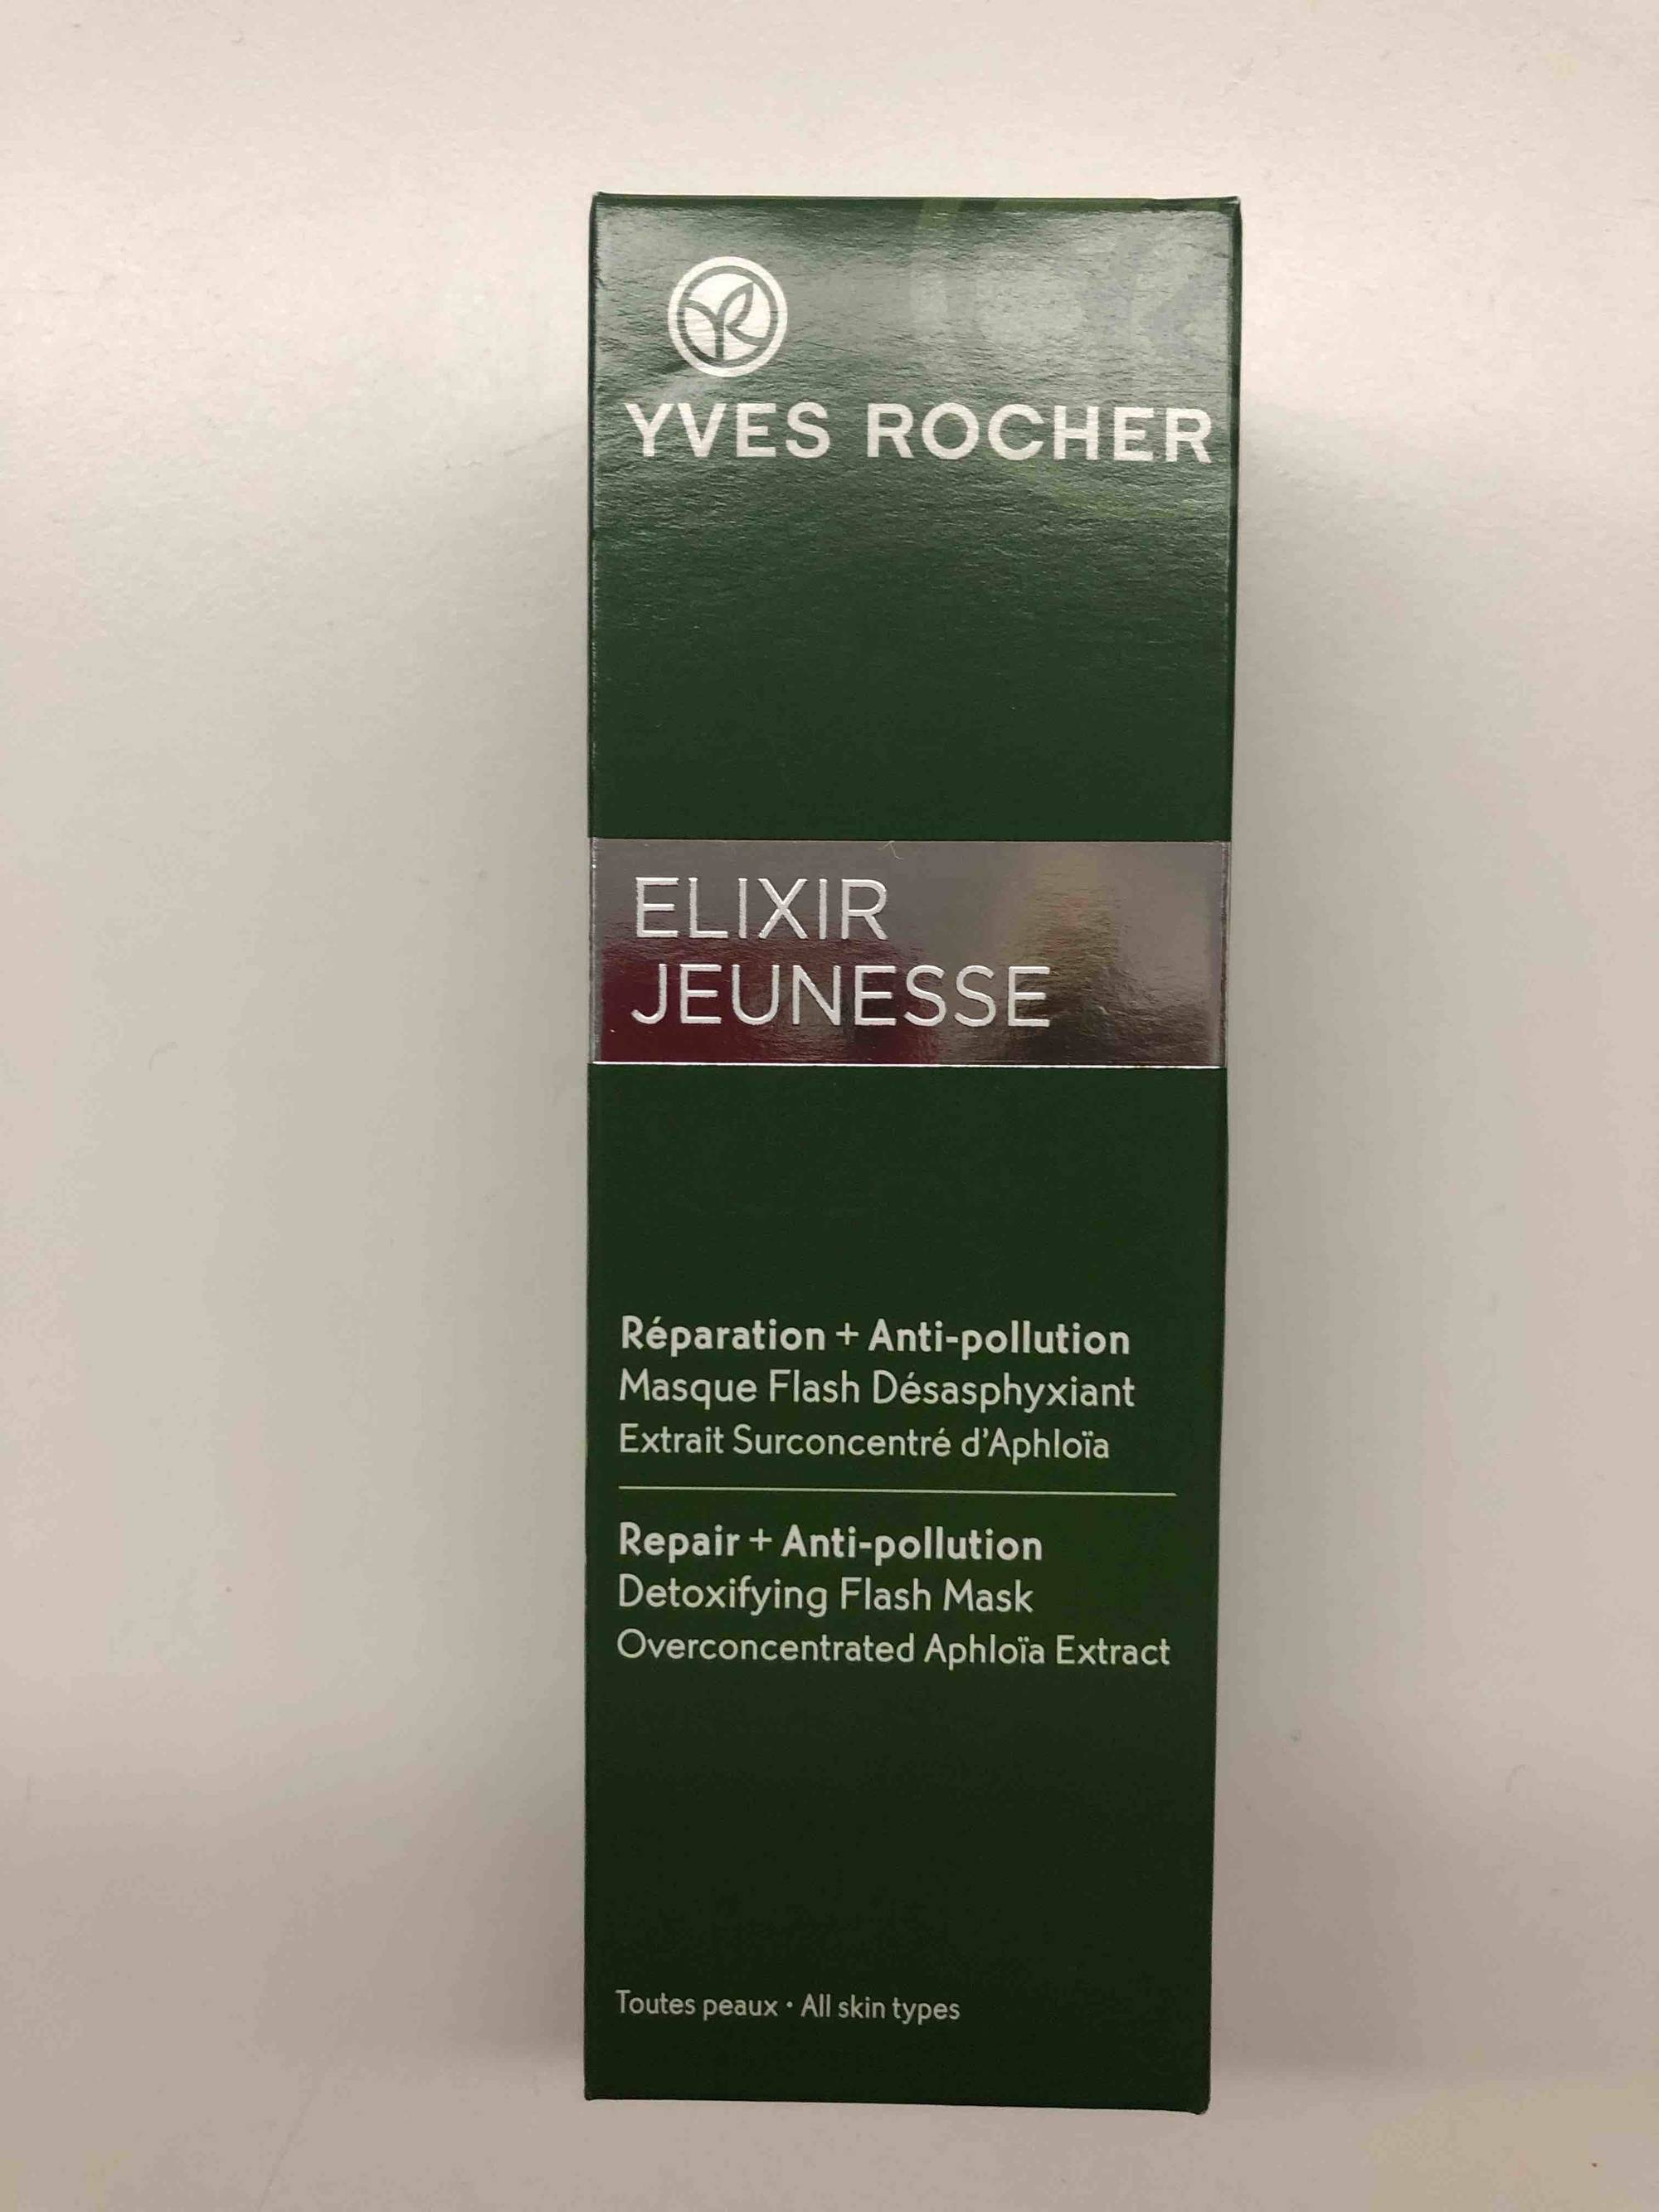 YVES ROCHER - Elixir jeunesse - Masque flash désasphyxiant